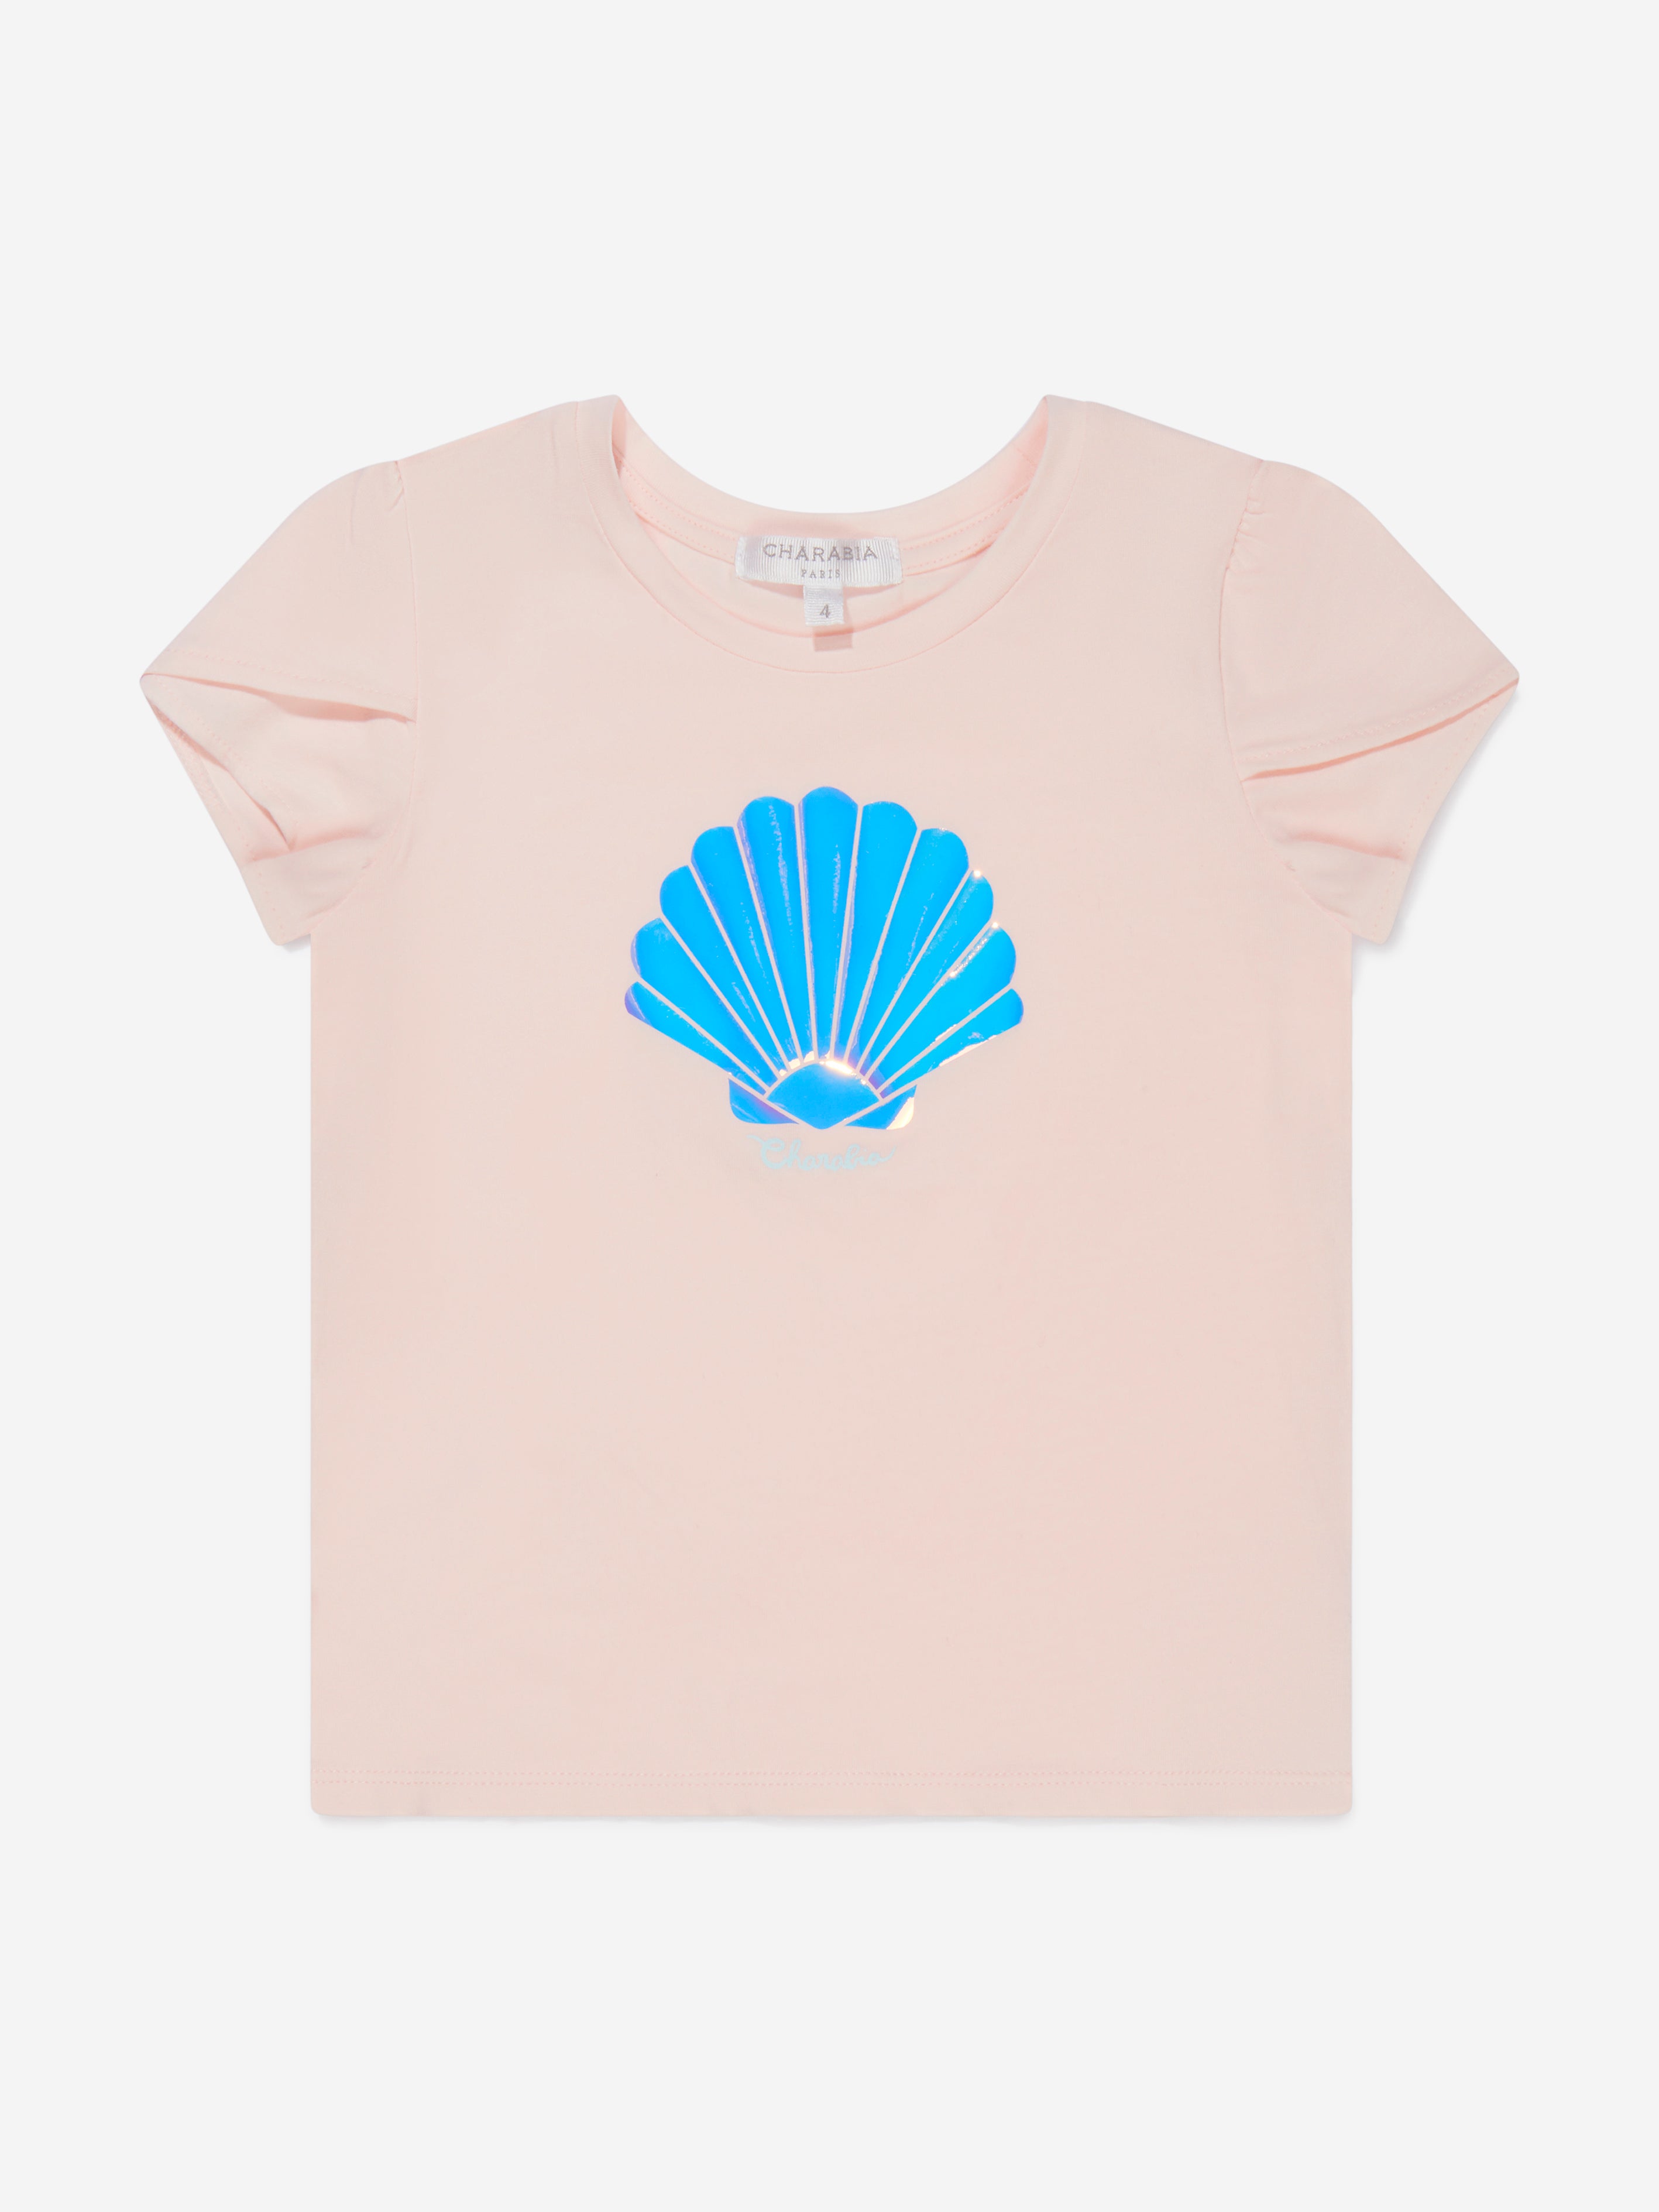 Charabia Babies' Girls Cotton Shell Print T-shirt 4 Yrs Pink